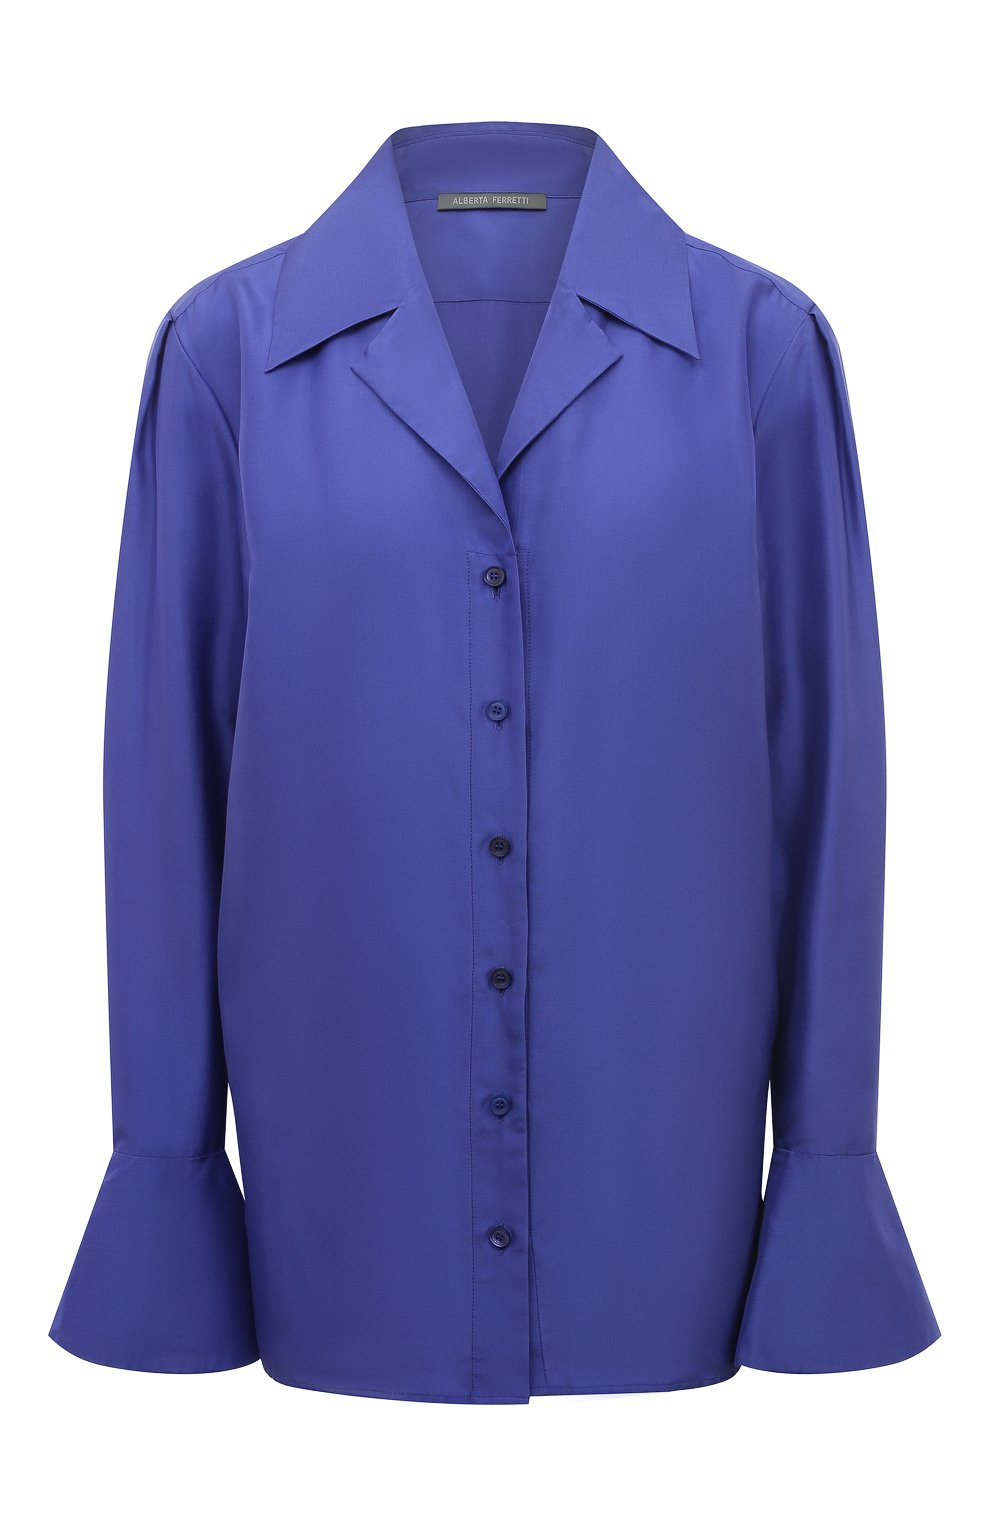 Блузы Alberta Ferretti, Шелковая блузка Alberta Ferretti, Венгрия, Синий, Шелк: 100%;, 13349516  - купить